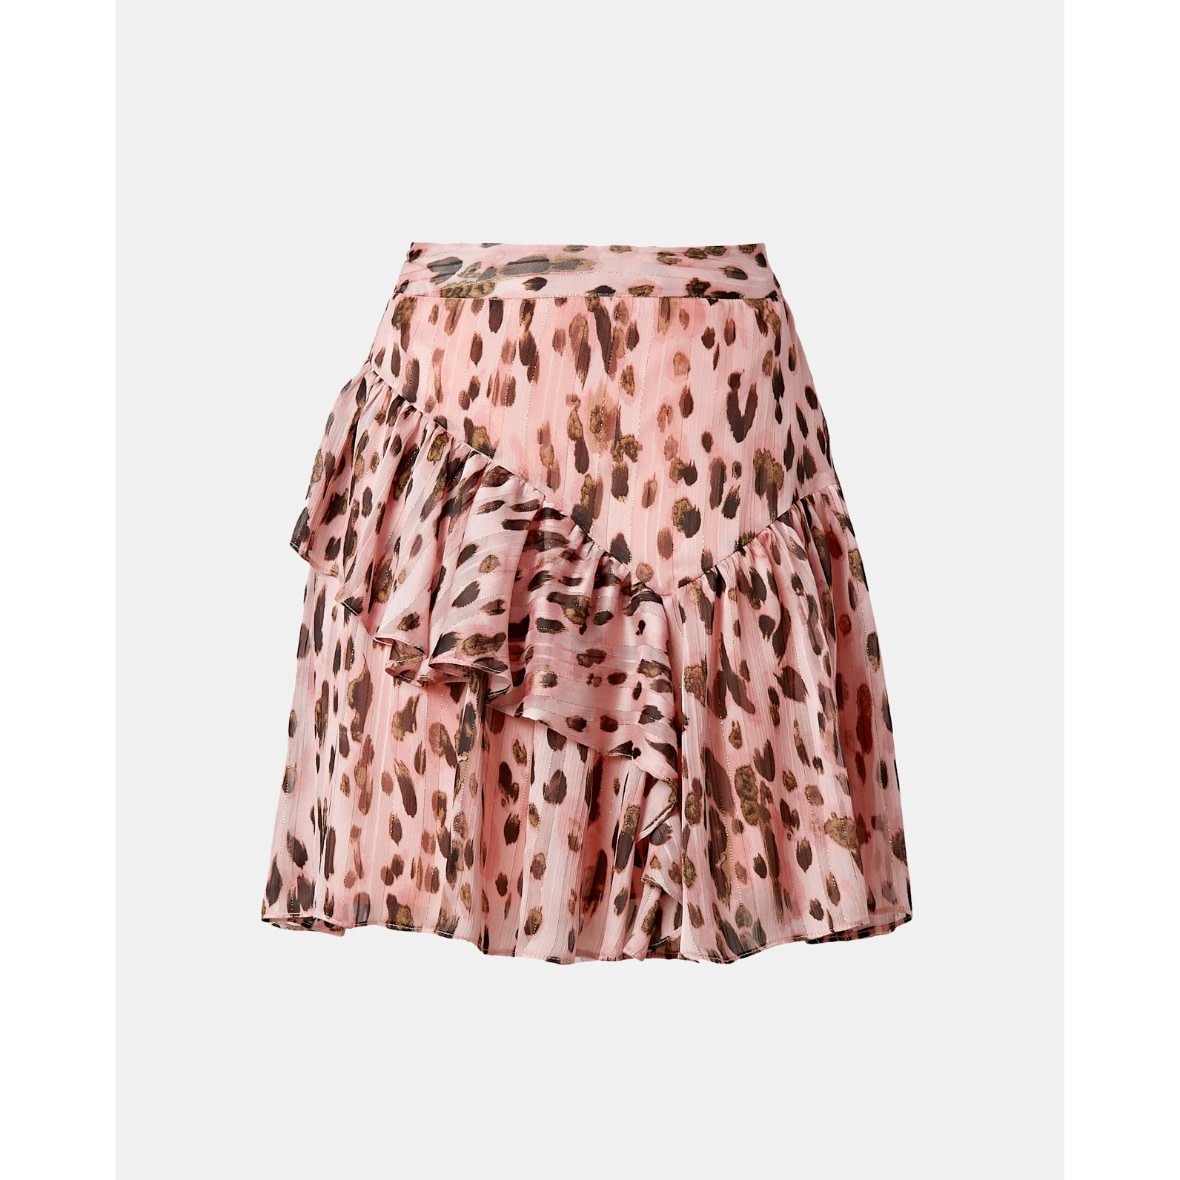 Milly Milly Heidi Metallic Leopard Stripe Burnout Skirt